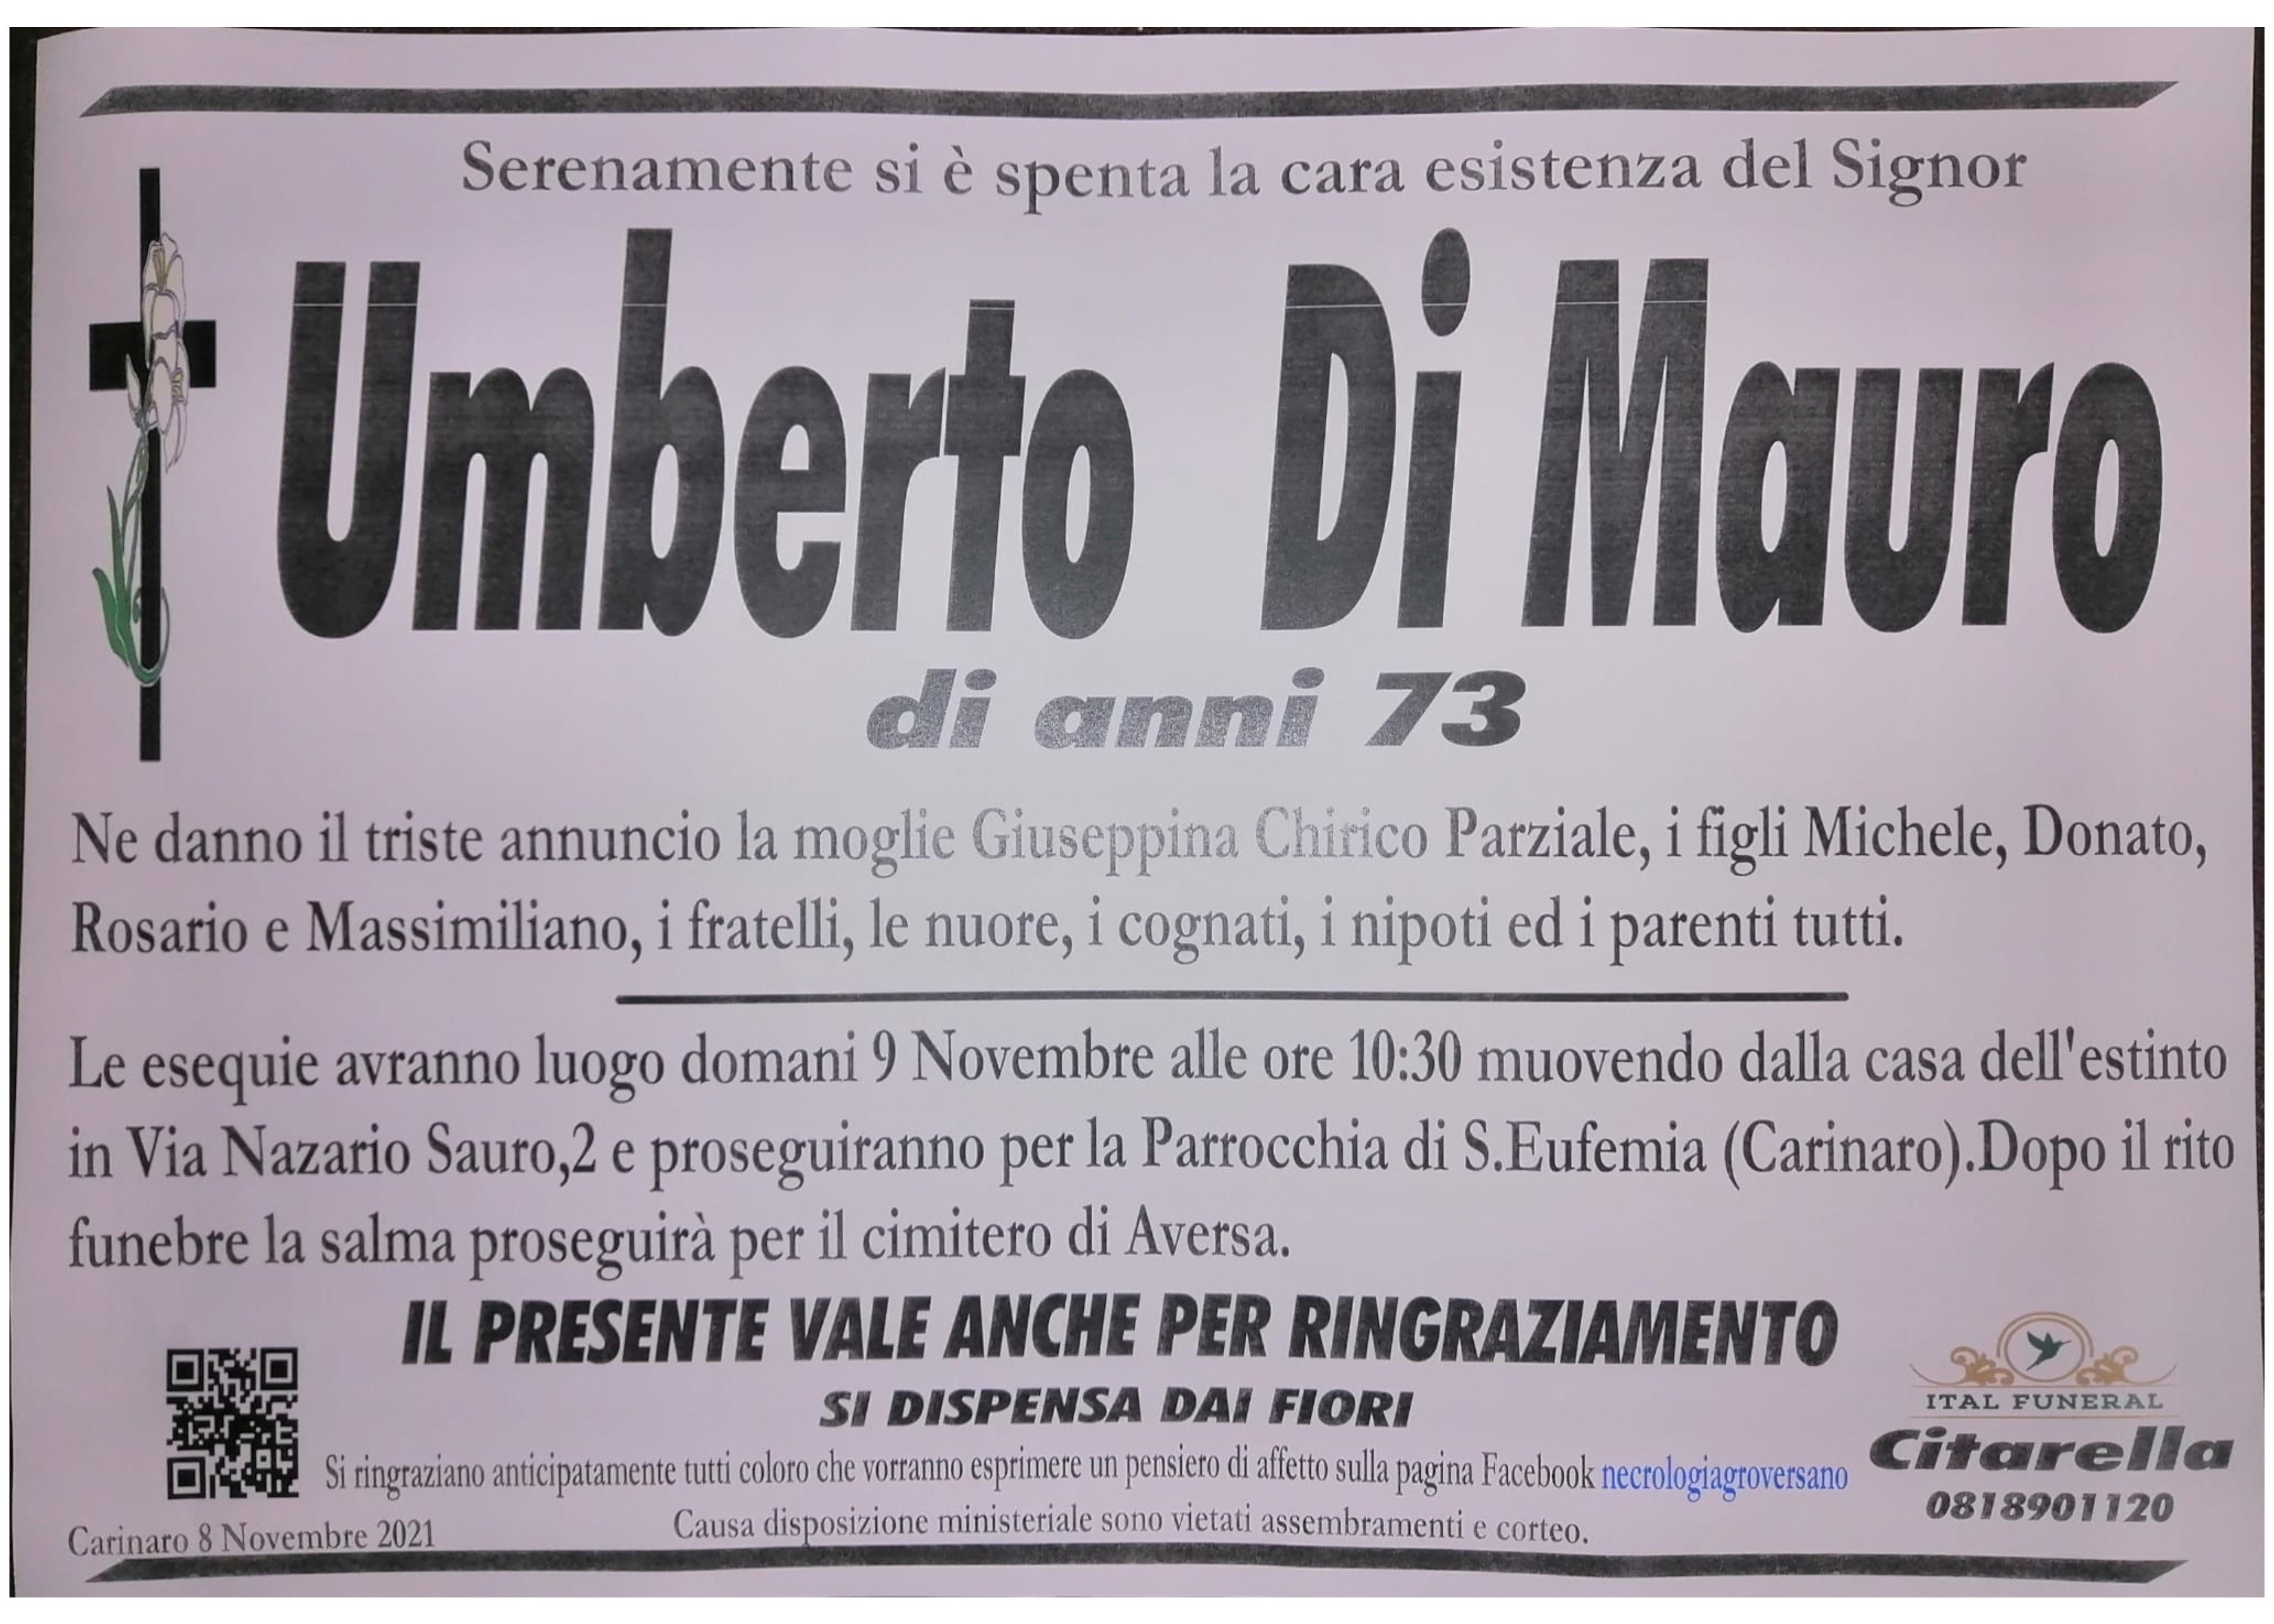 Umberto Di Mauro